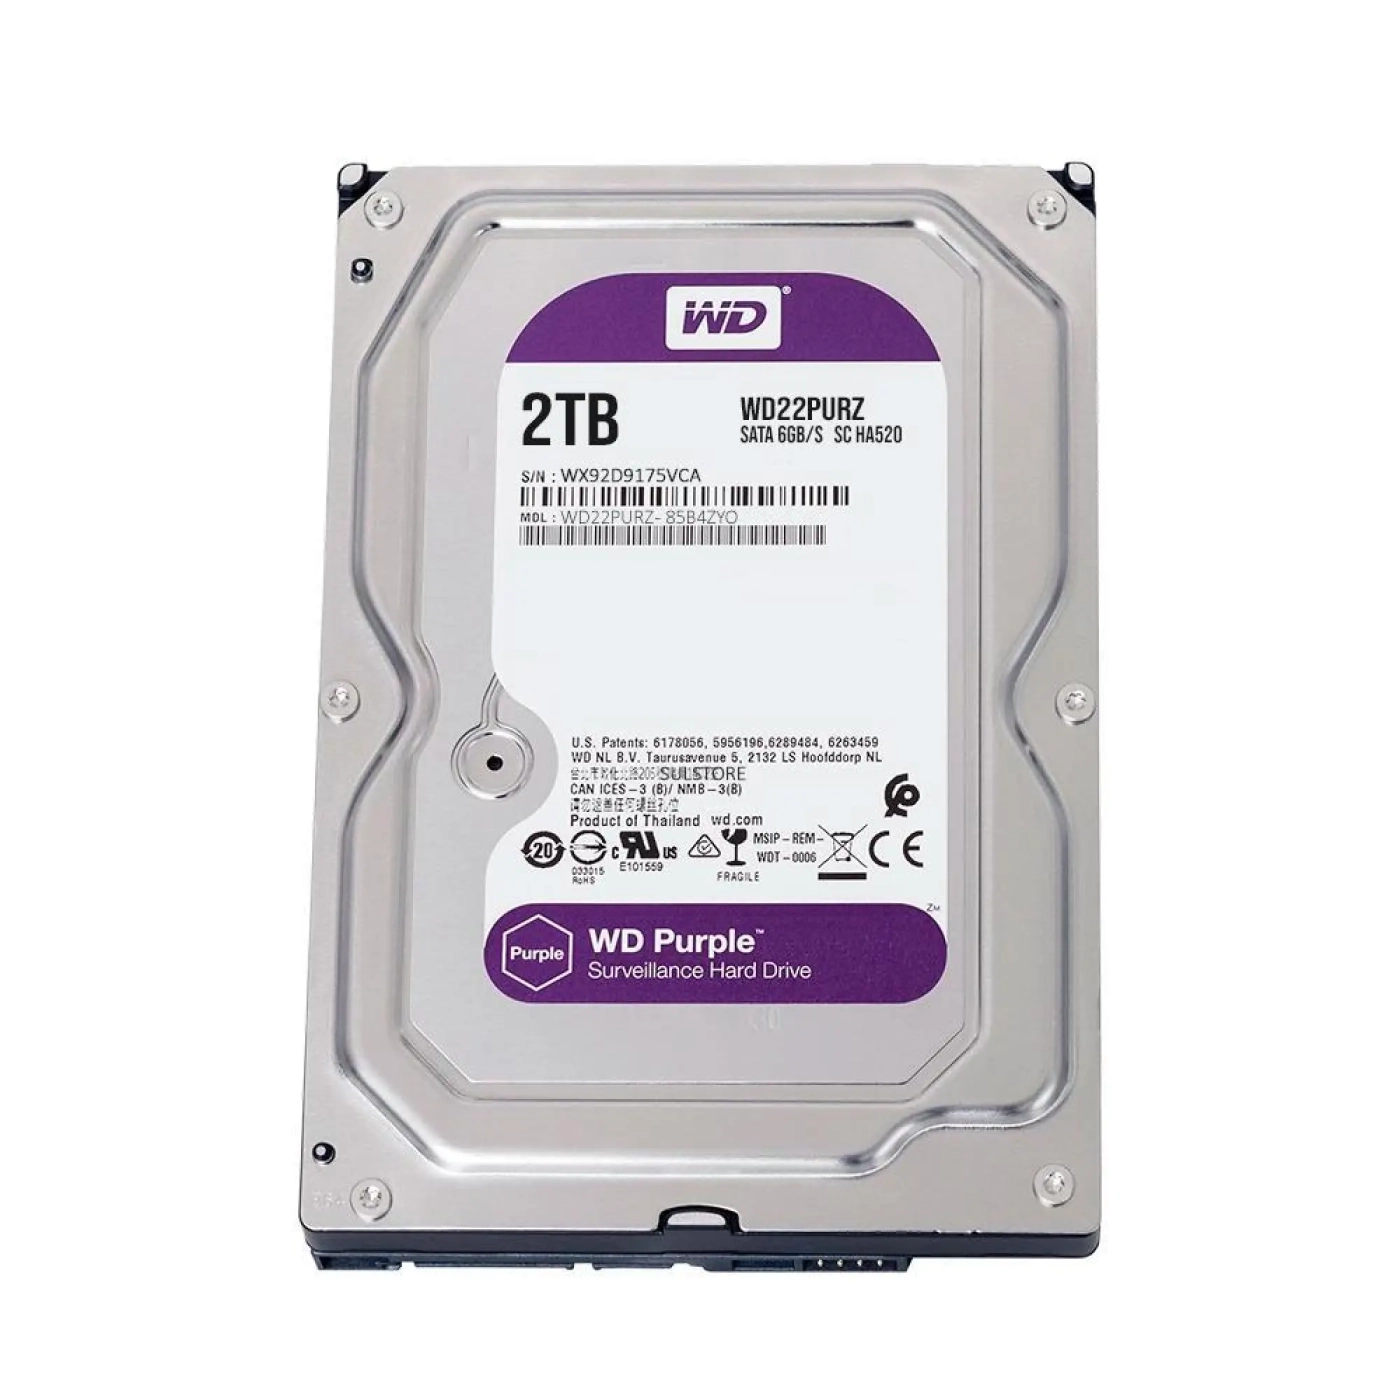 Купить Жесткий диск Western Digital Purple 2TB IntelliPower, 256 MB, 3.5' SATA III (WD22PURZ) - фото 2